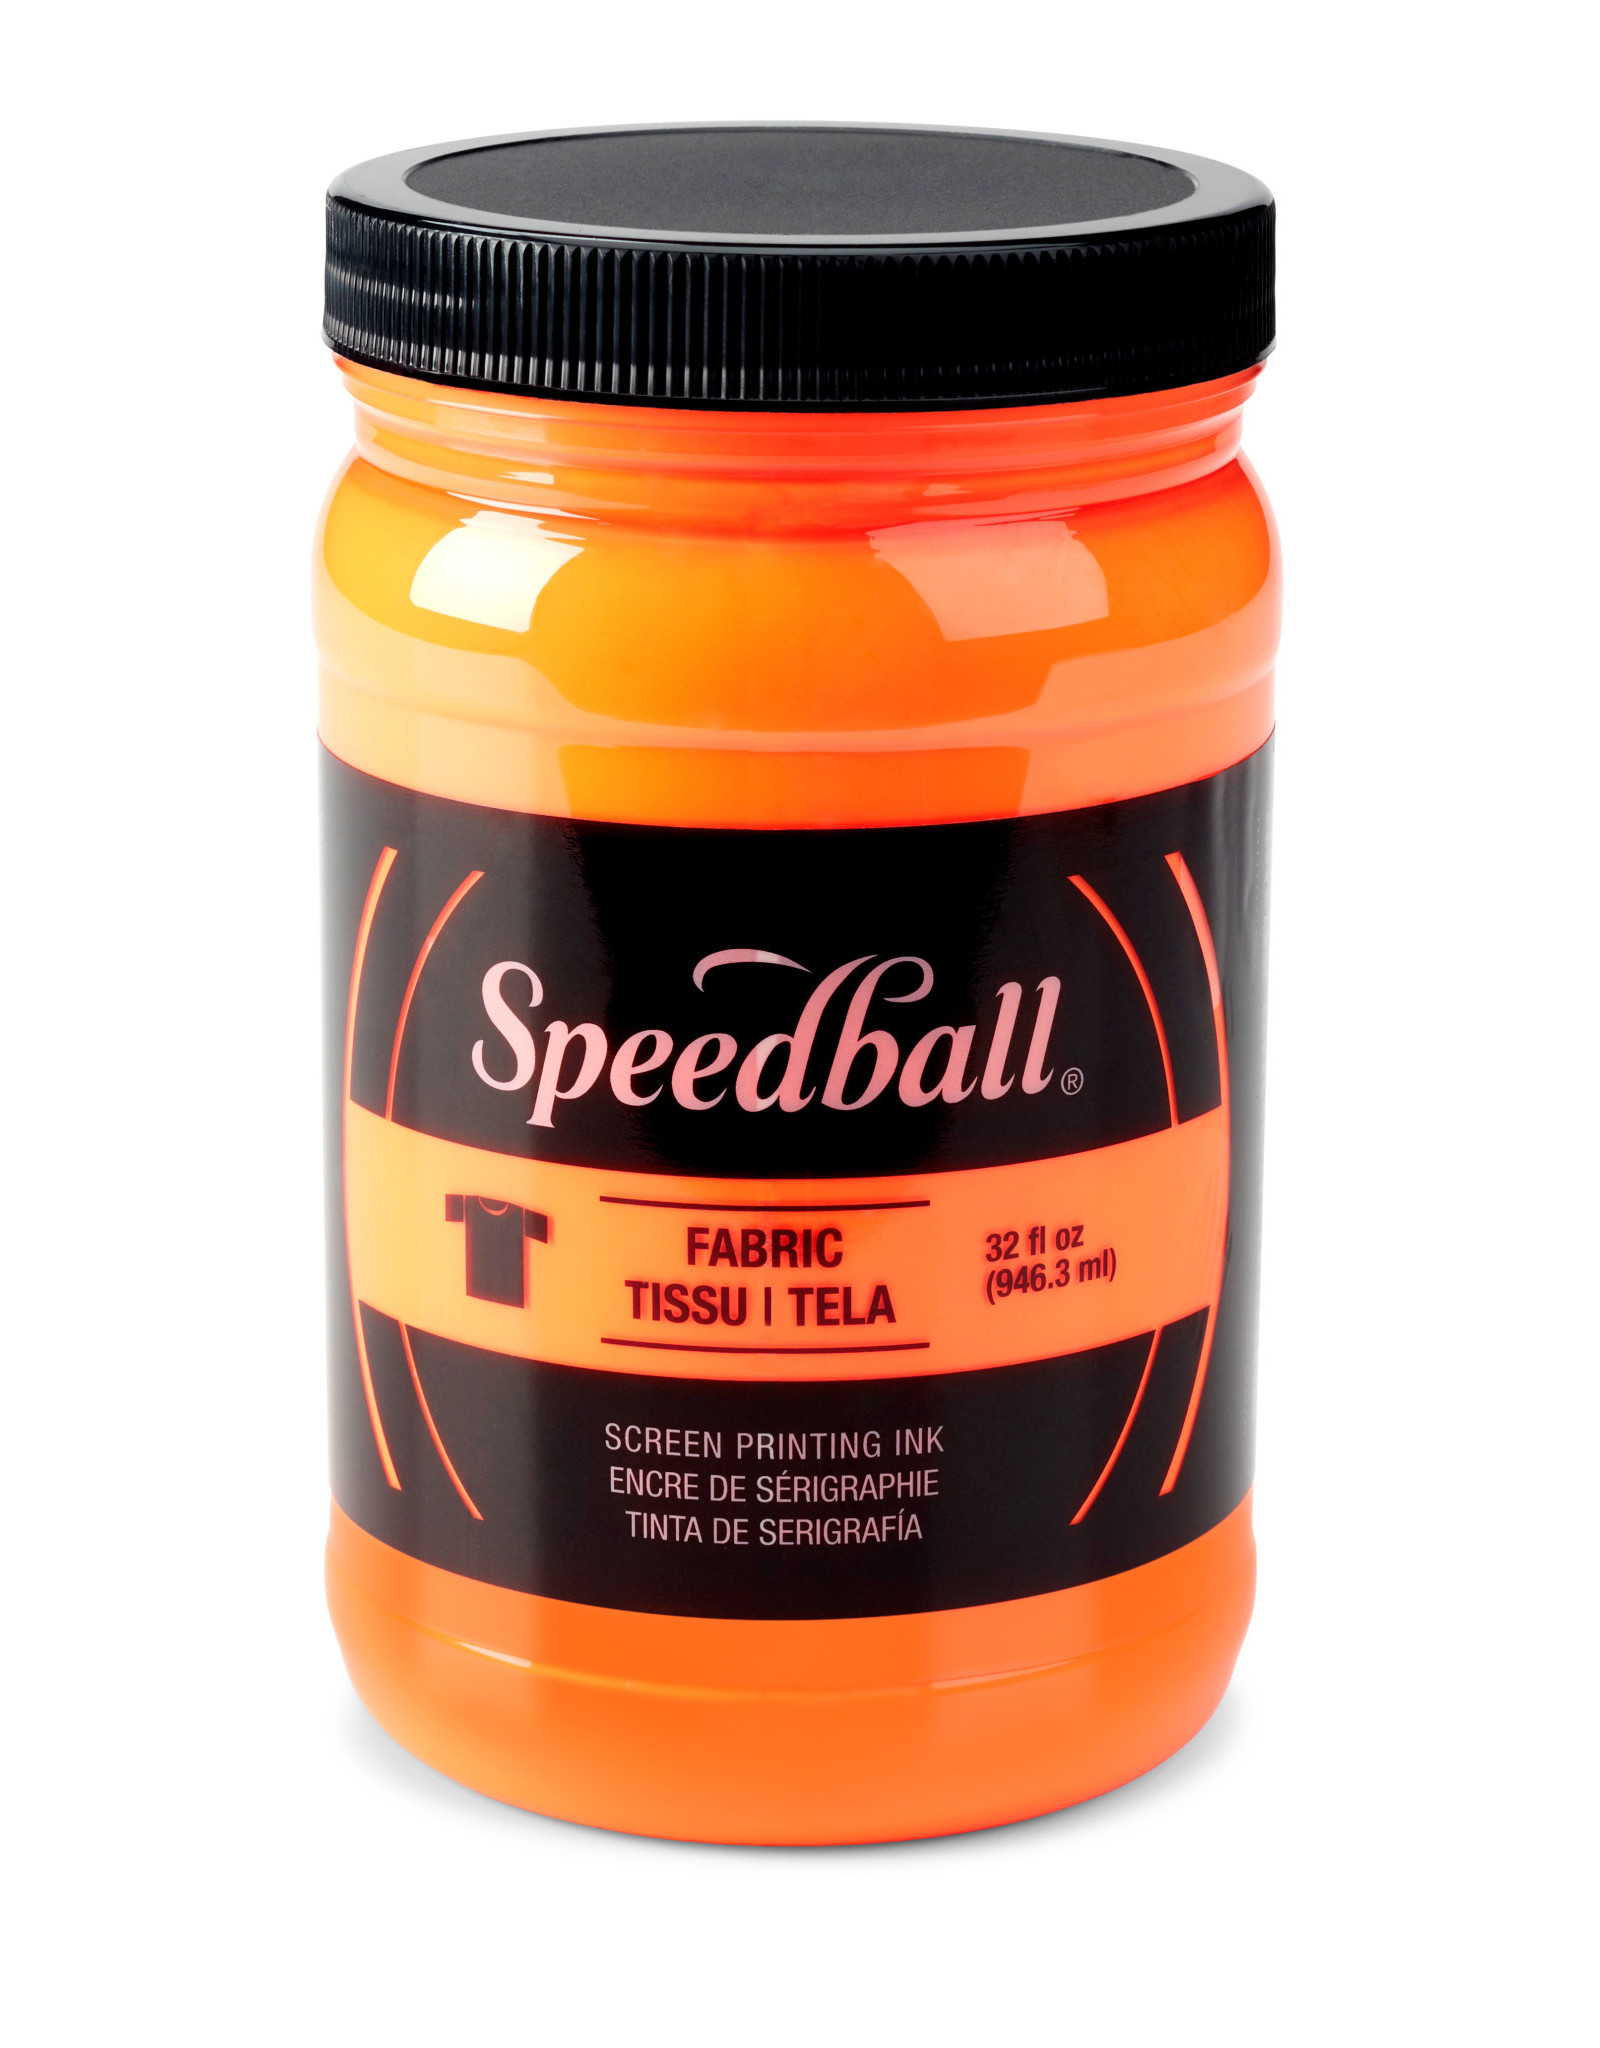 SPEEDBALL ART PRODUCTS Speedball Fabric Screen Printing Ink, Fluorescent Orange, 32oz